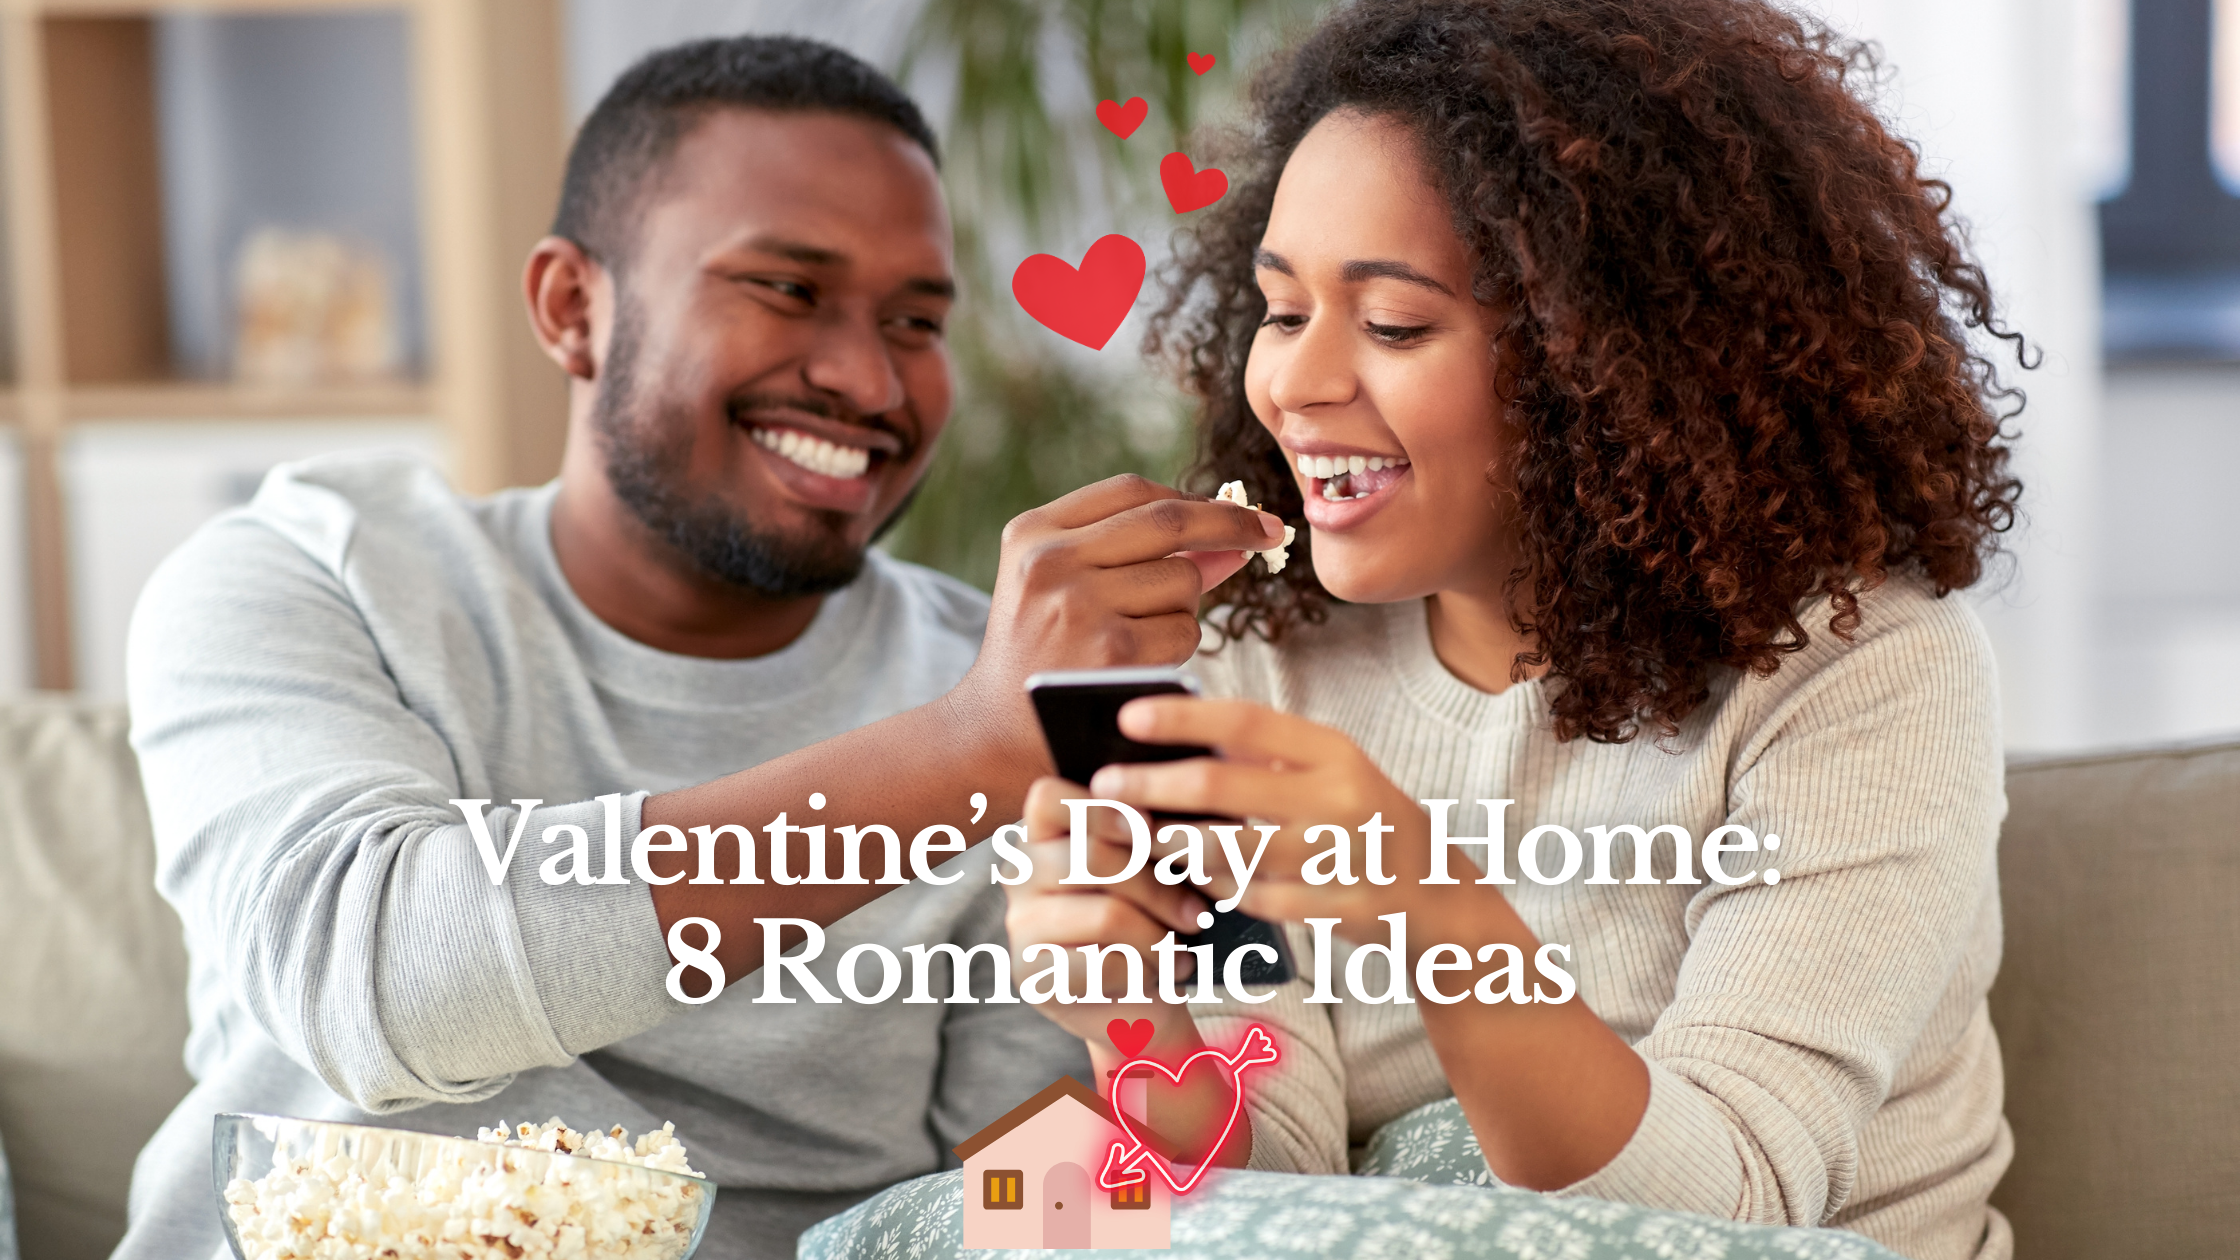 Celebrating Valentine’s Day at Home: 8 Romantic Ideas